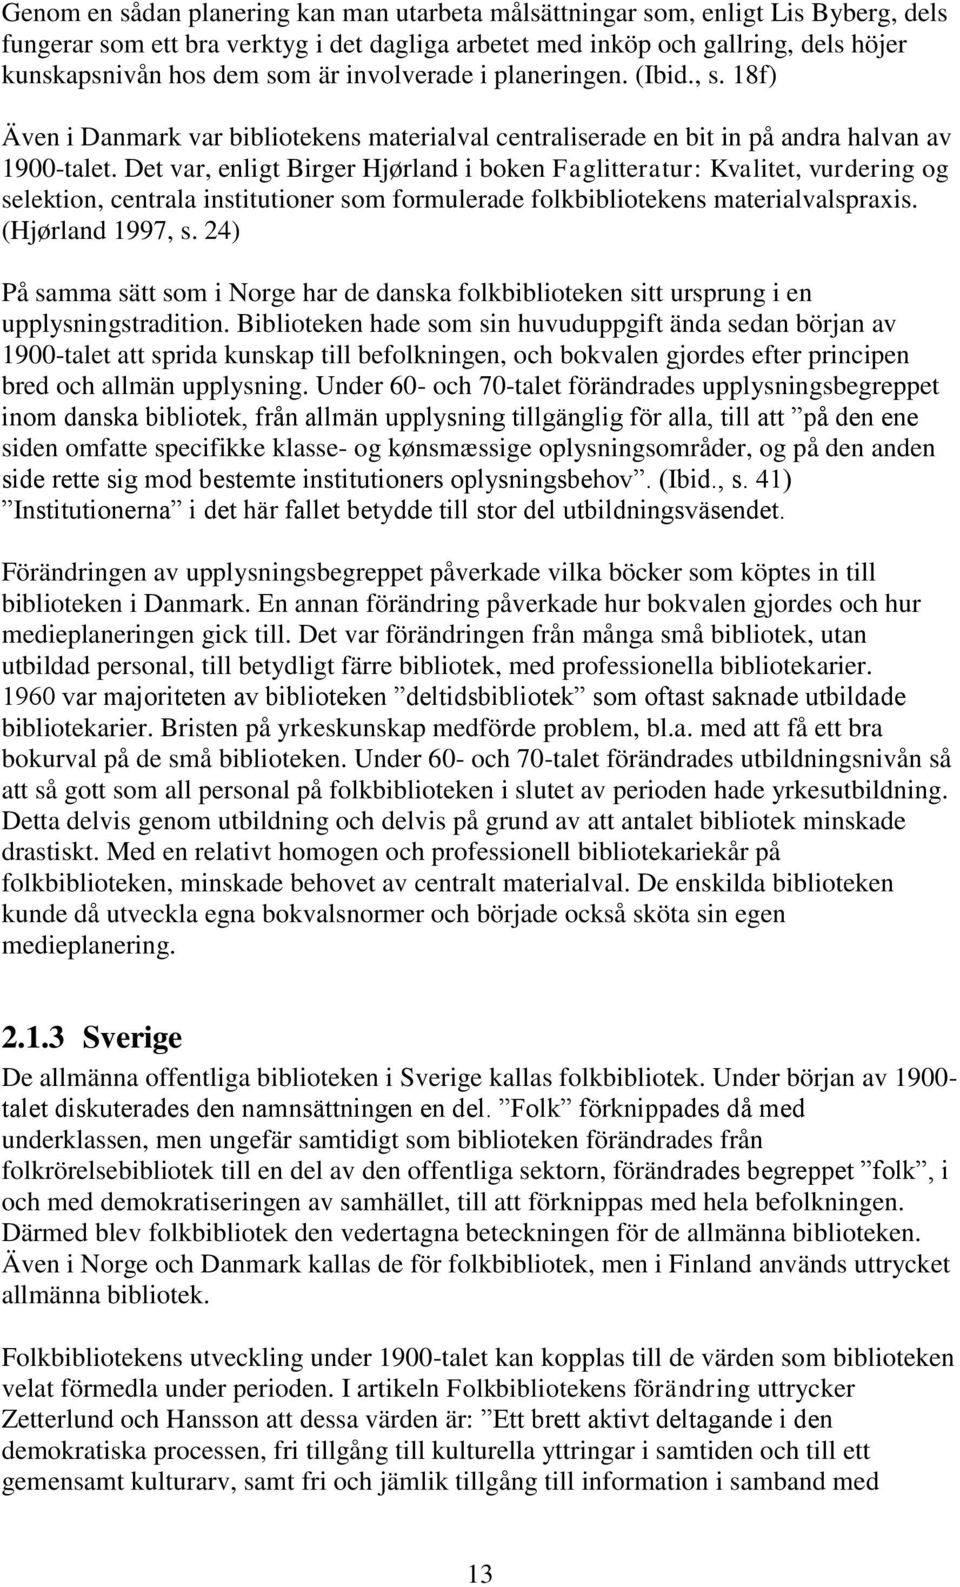 Det var, enligt Birger Hjørland i boken Faglitteratur: Kvalitet, vurdering og selektion, centrala institutioner som formulerade folkbibliotekens materialvalspraxis. (Hjørland 1997, s.